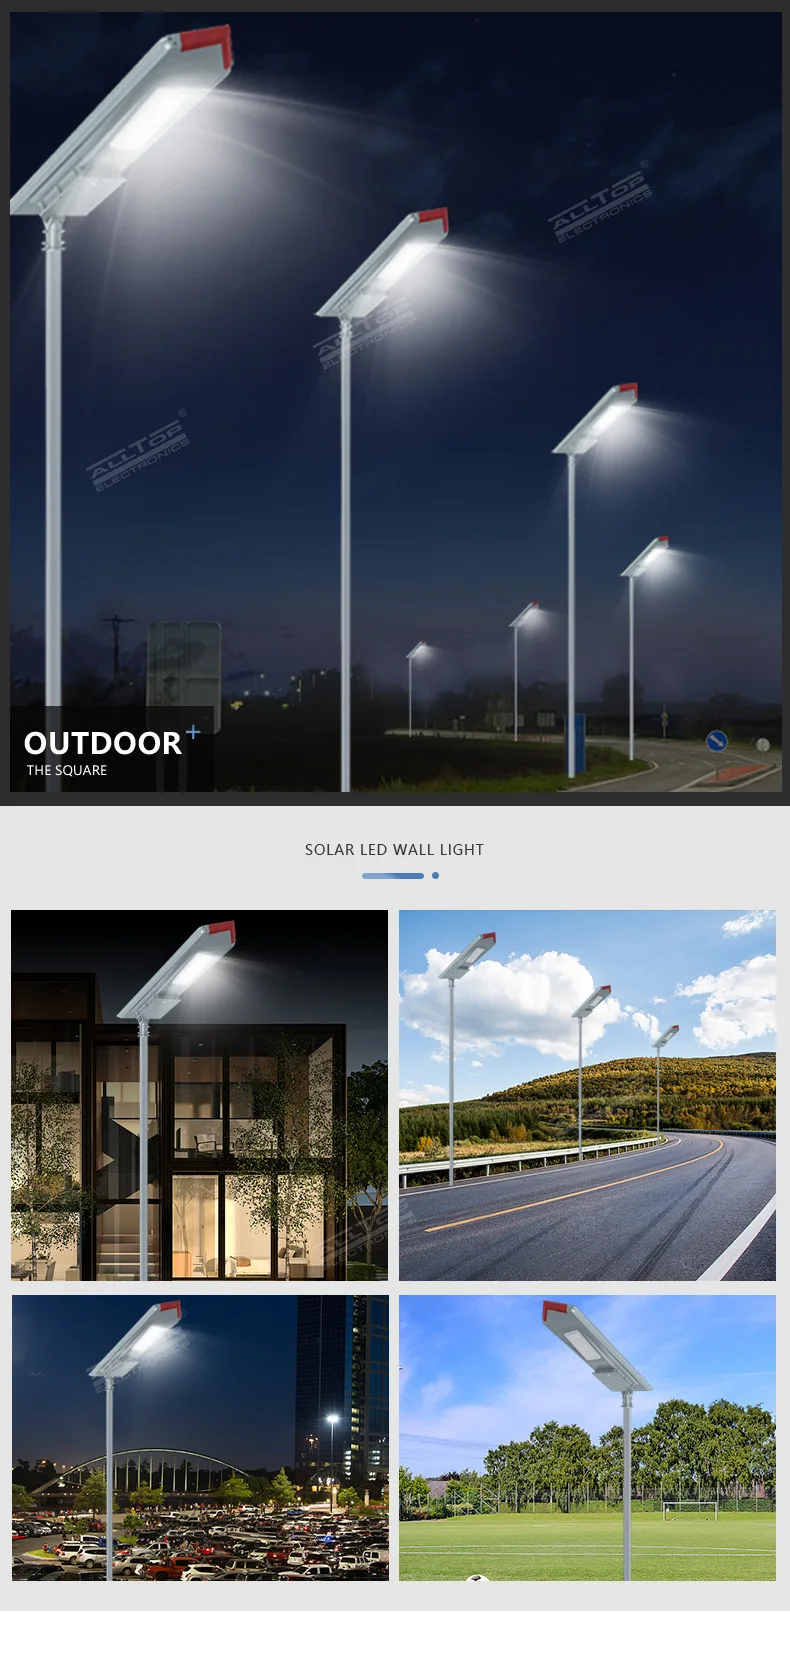 ALLTOP High power garden motion sensor outdoor integrated 150w IP65 all in one led solar street light